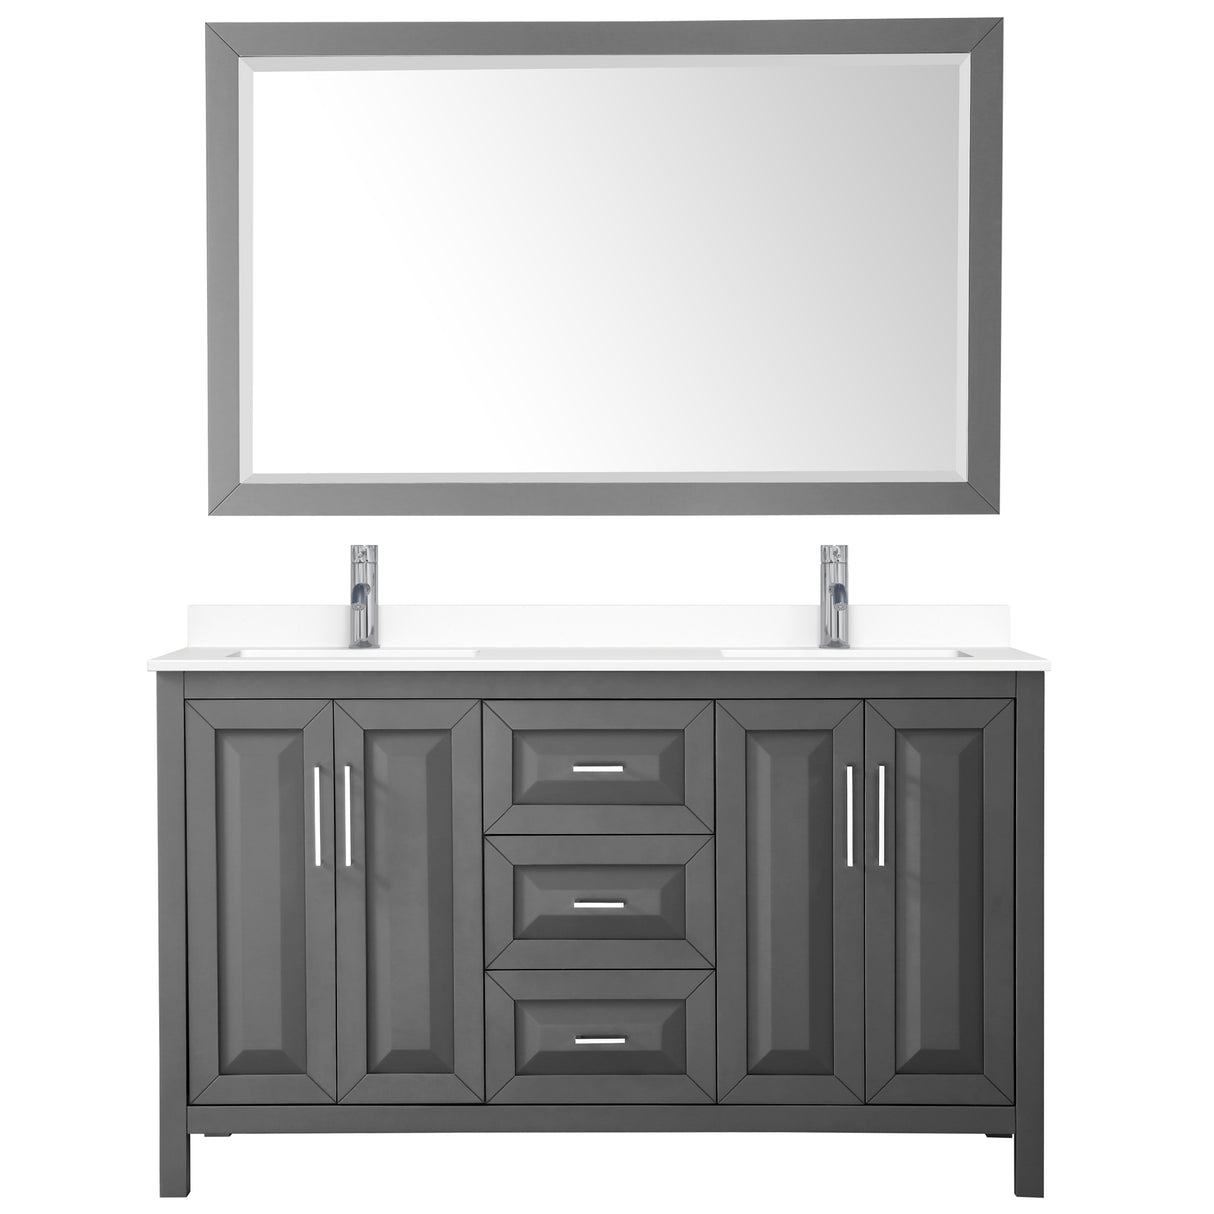 Daria 60 Inch Double Bathroom Vanity in Dark Gray White Cultured Marble Countertop Undermount Square Sinks 58 Inch Mirror